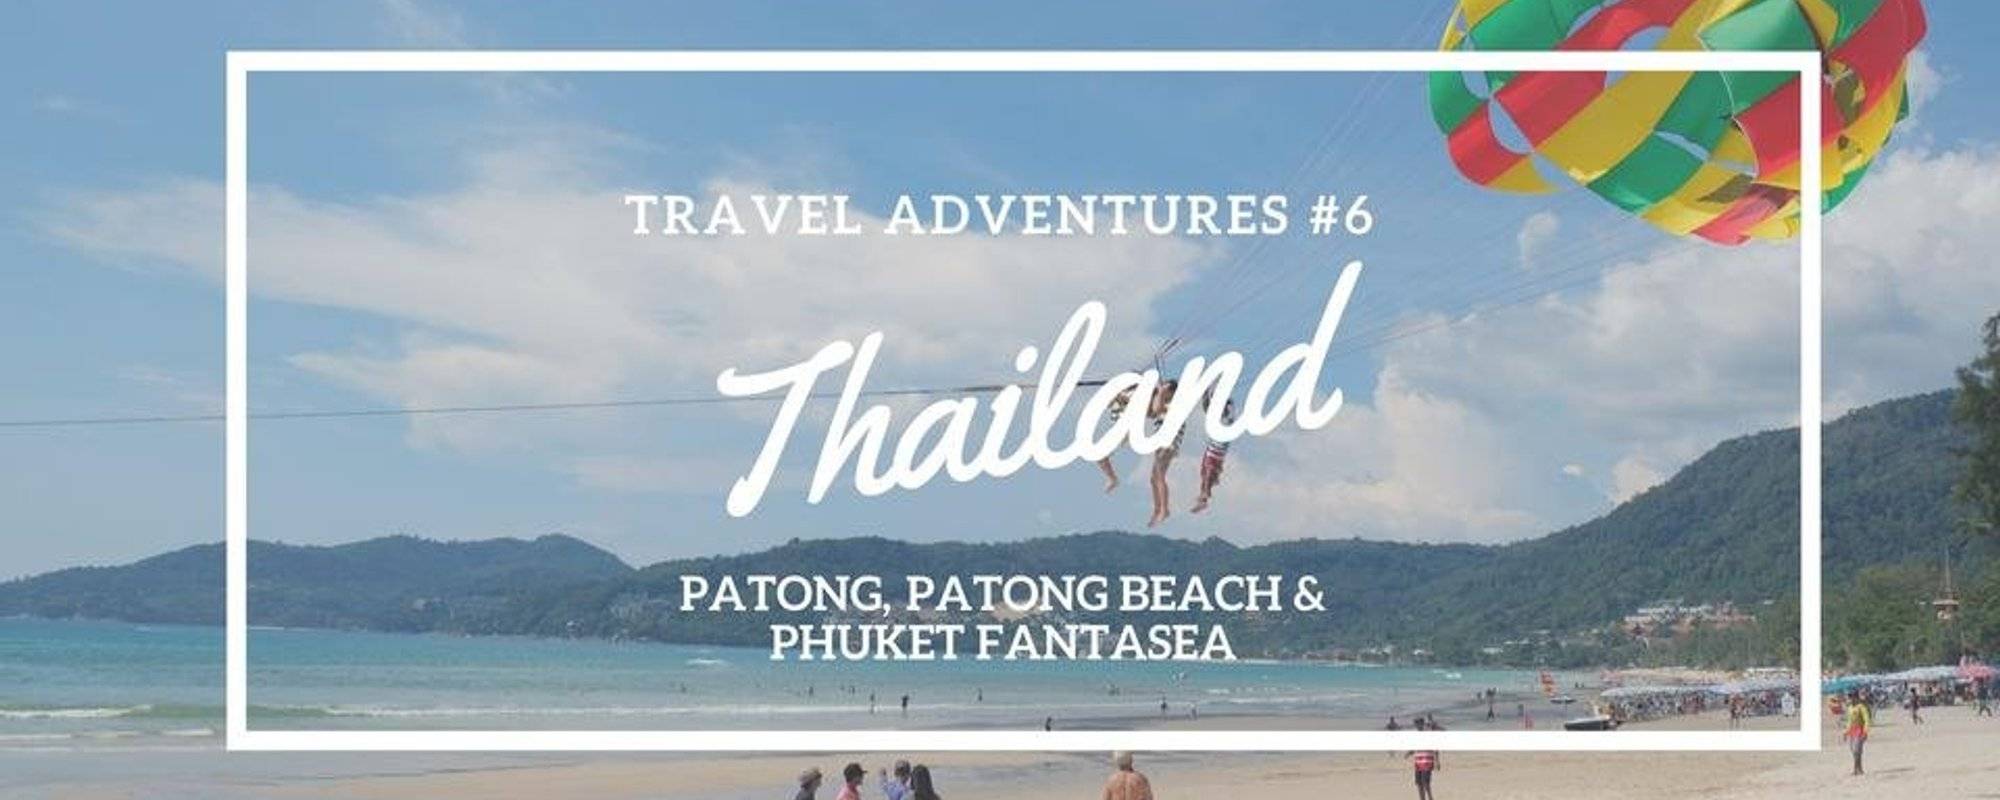 Travel Adventures #6 | Thailand | Patong, Patong Beach & Phuket Fantasea